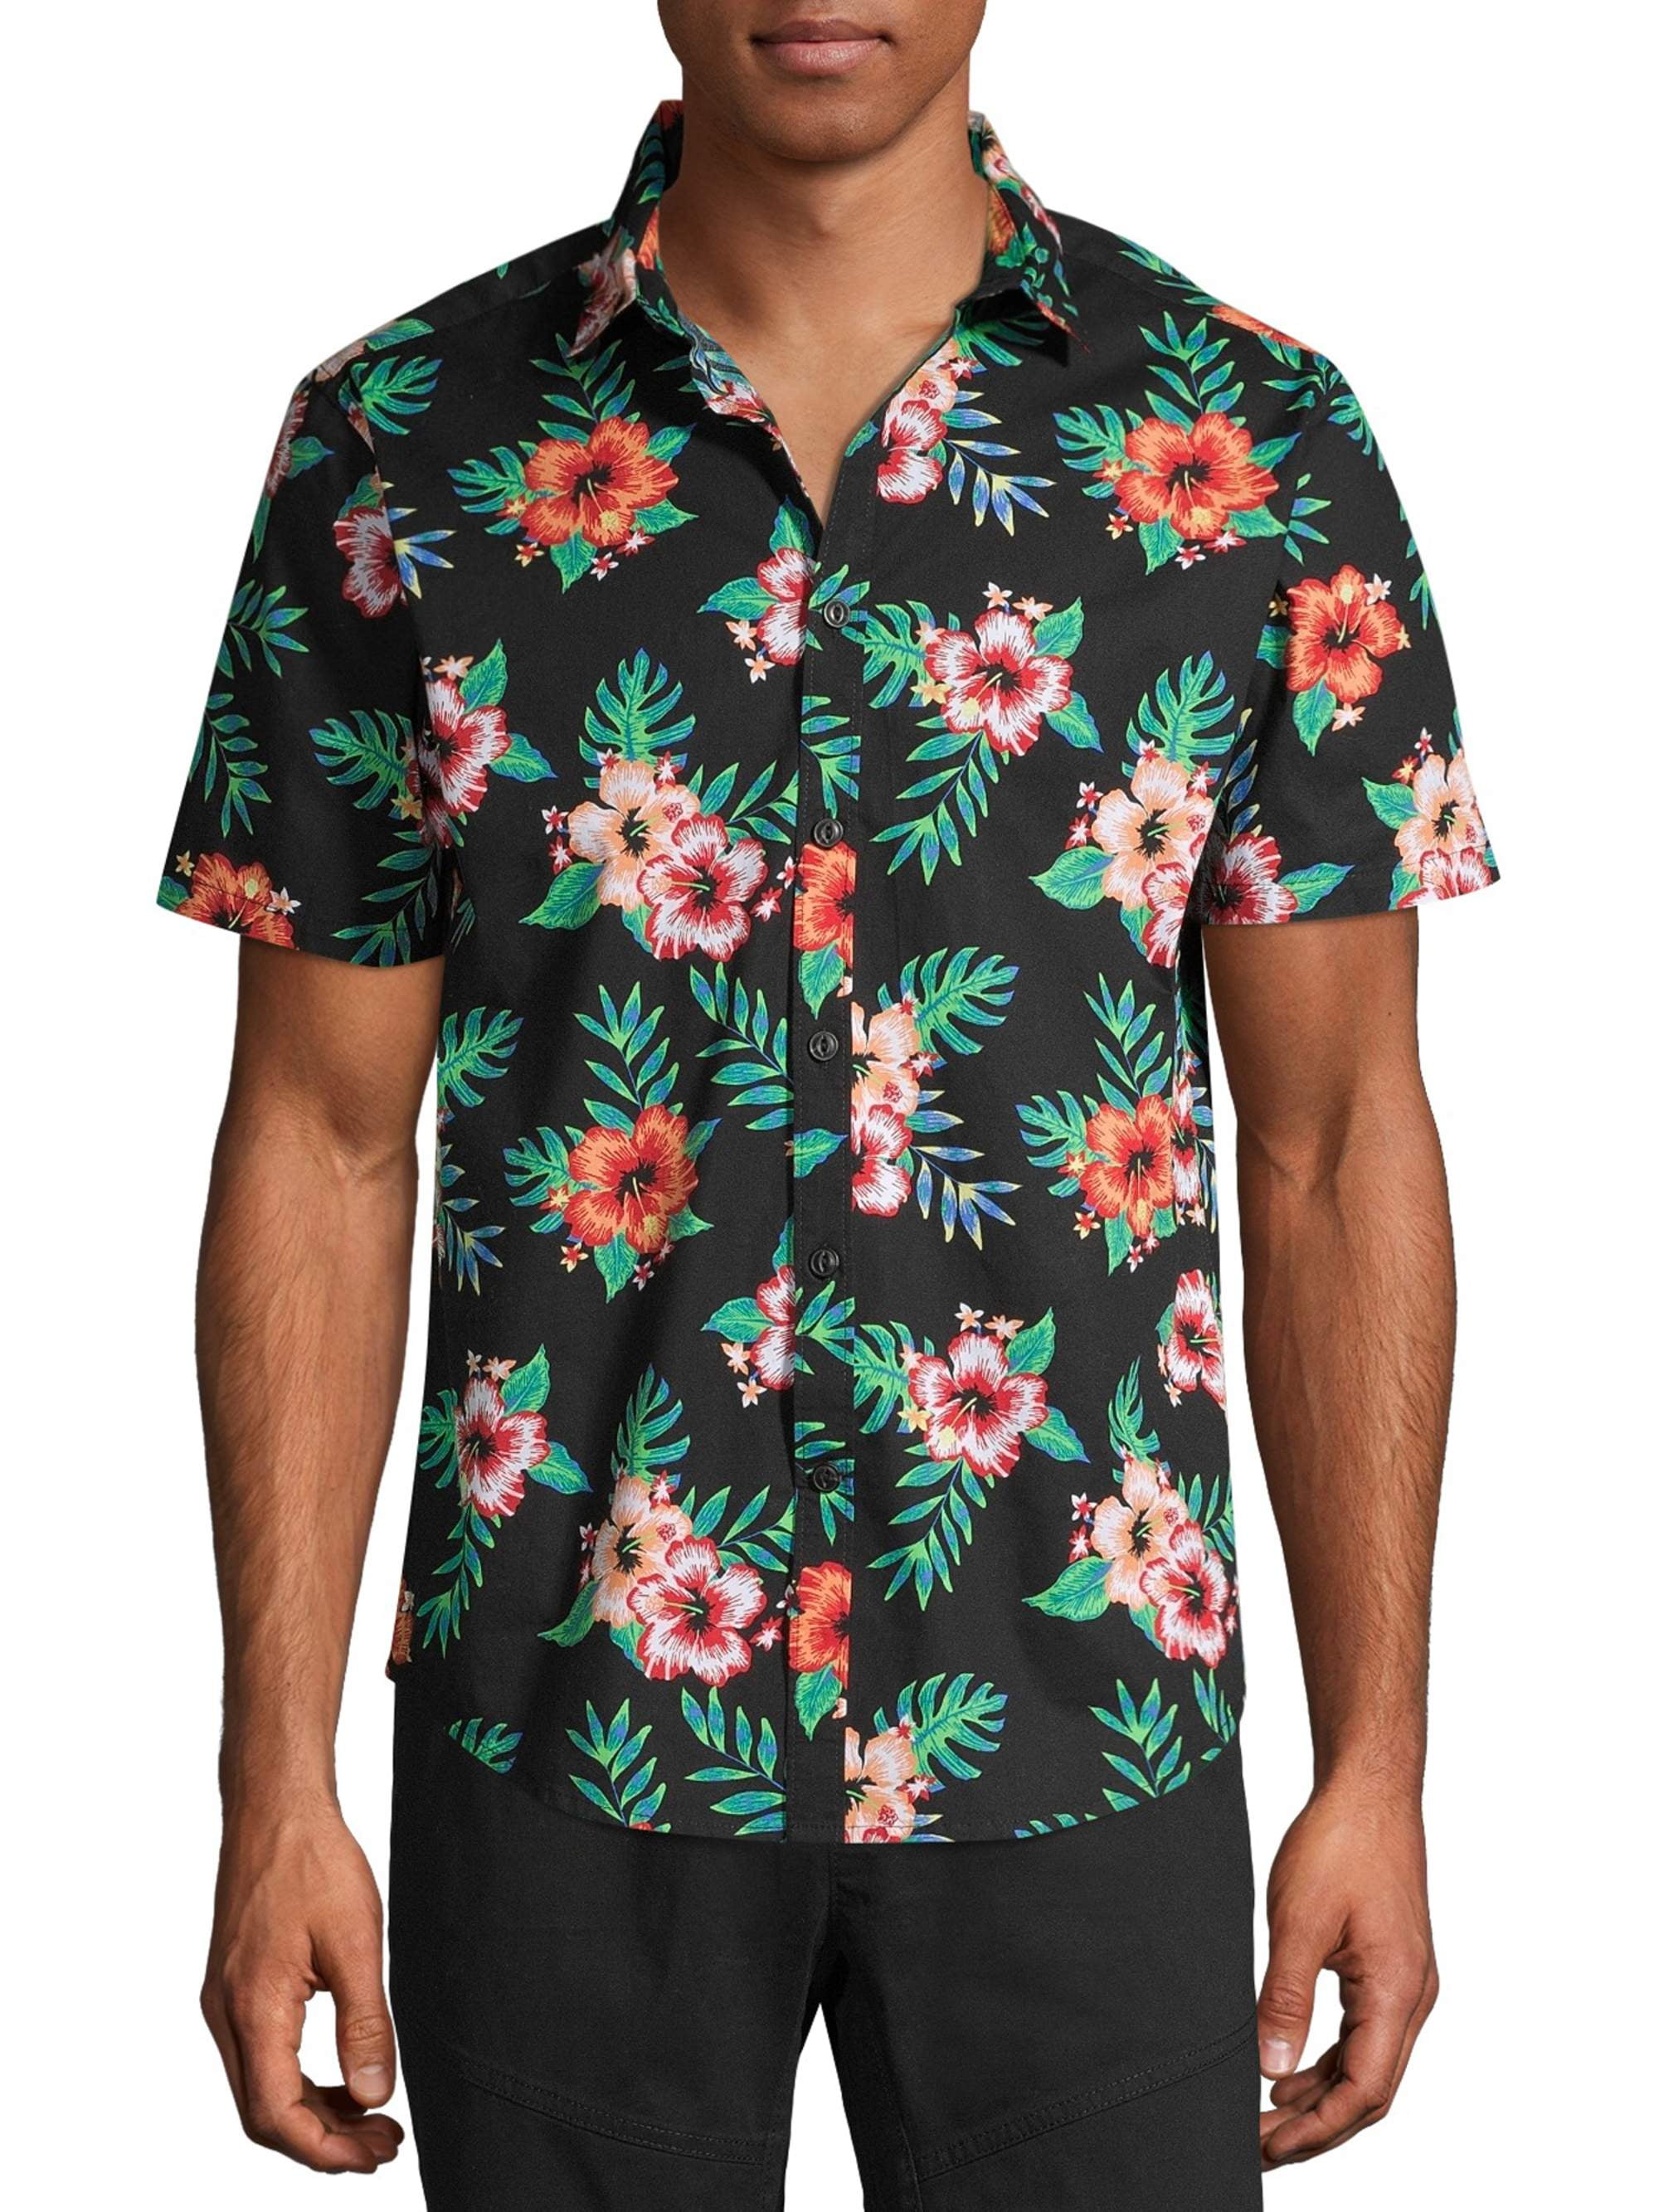 ZXLLZ Buttoned Flower Casual Short Sleeve Tropical Hawaiian Shirt Men Multicolored-5,Small 